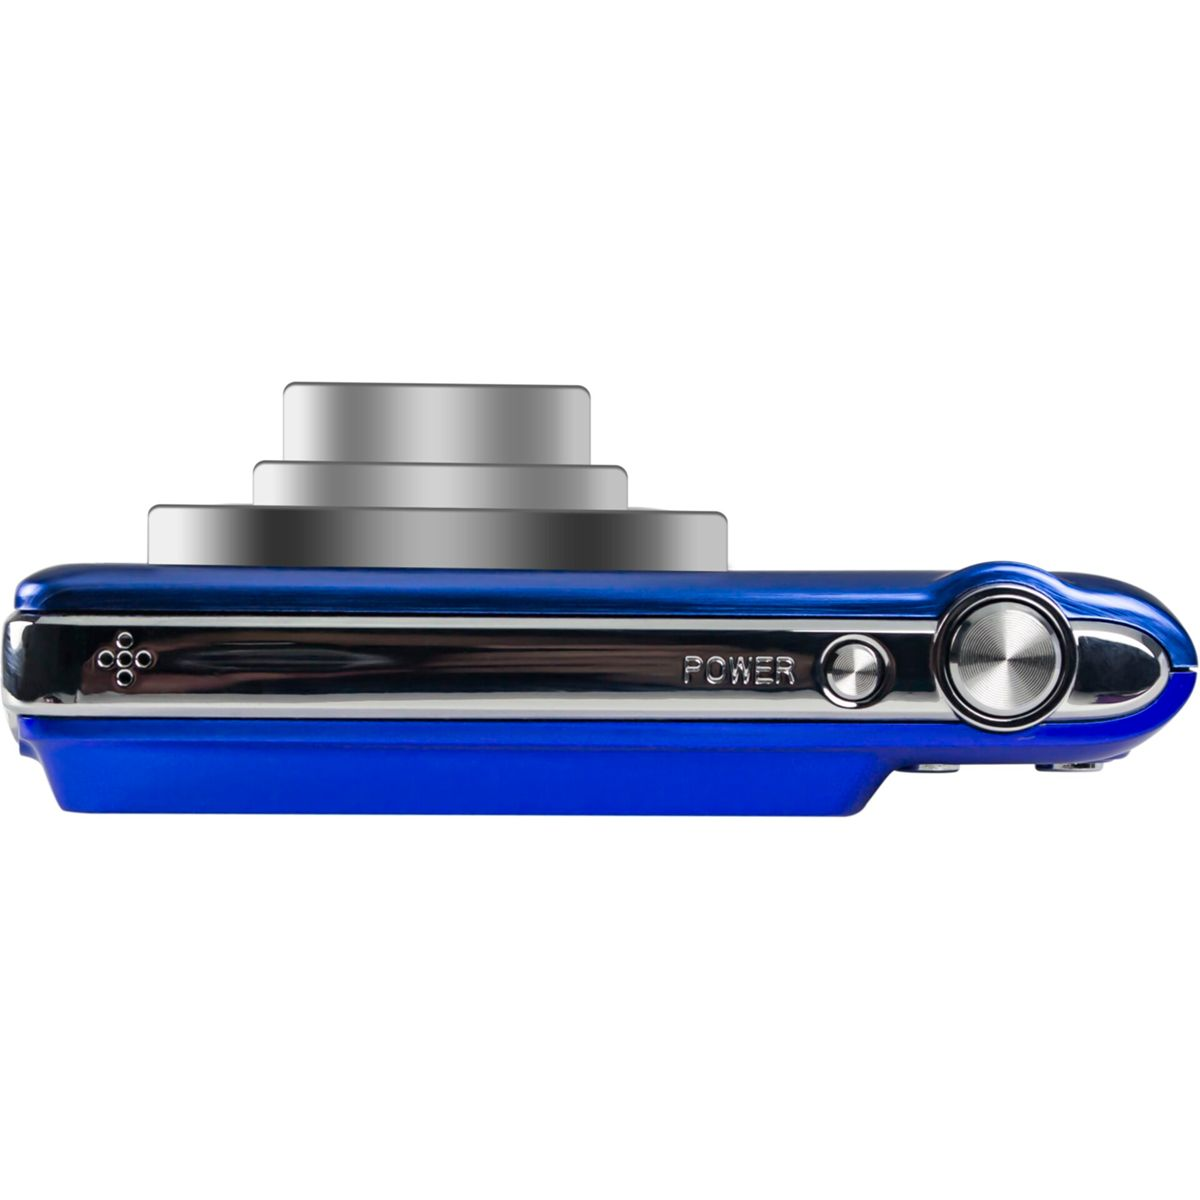 blau x TFT- LCD-Backlight LCD DC8200 opt. mit Digitalkamera blau, Realishot 8 Zoom, AGFAPHOTO